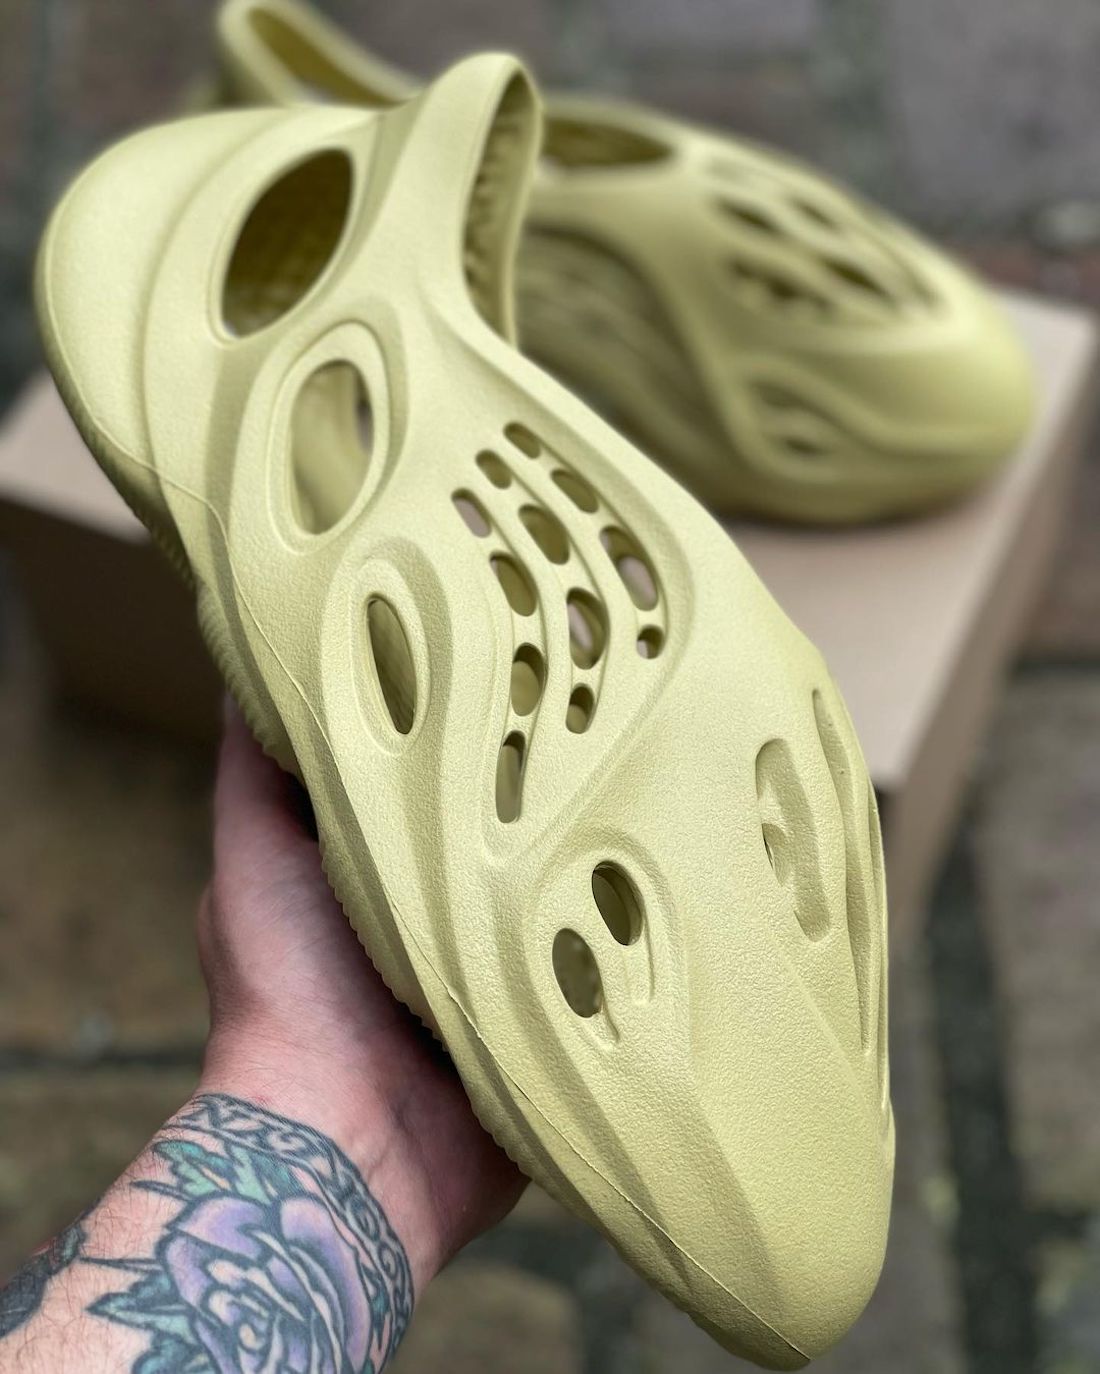 adidas Yeezy Foam Runner Sulfur GV6775 Release Date